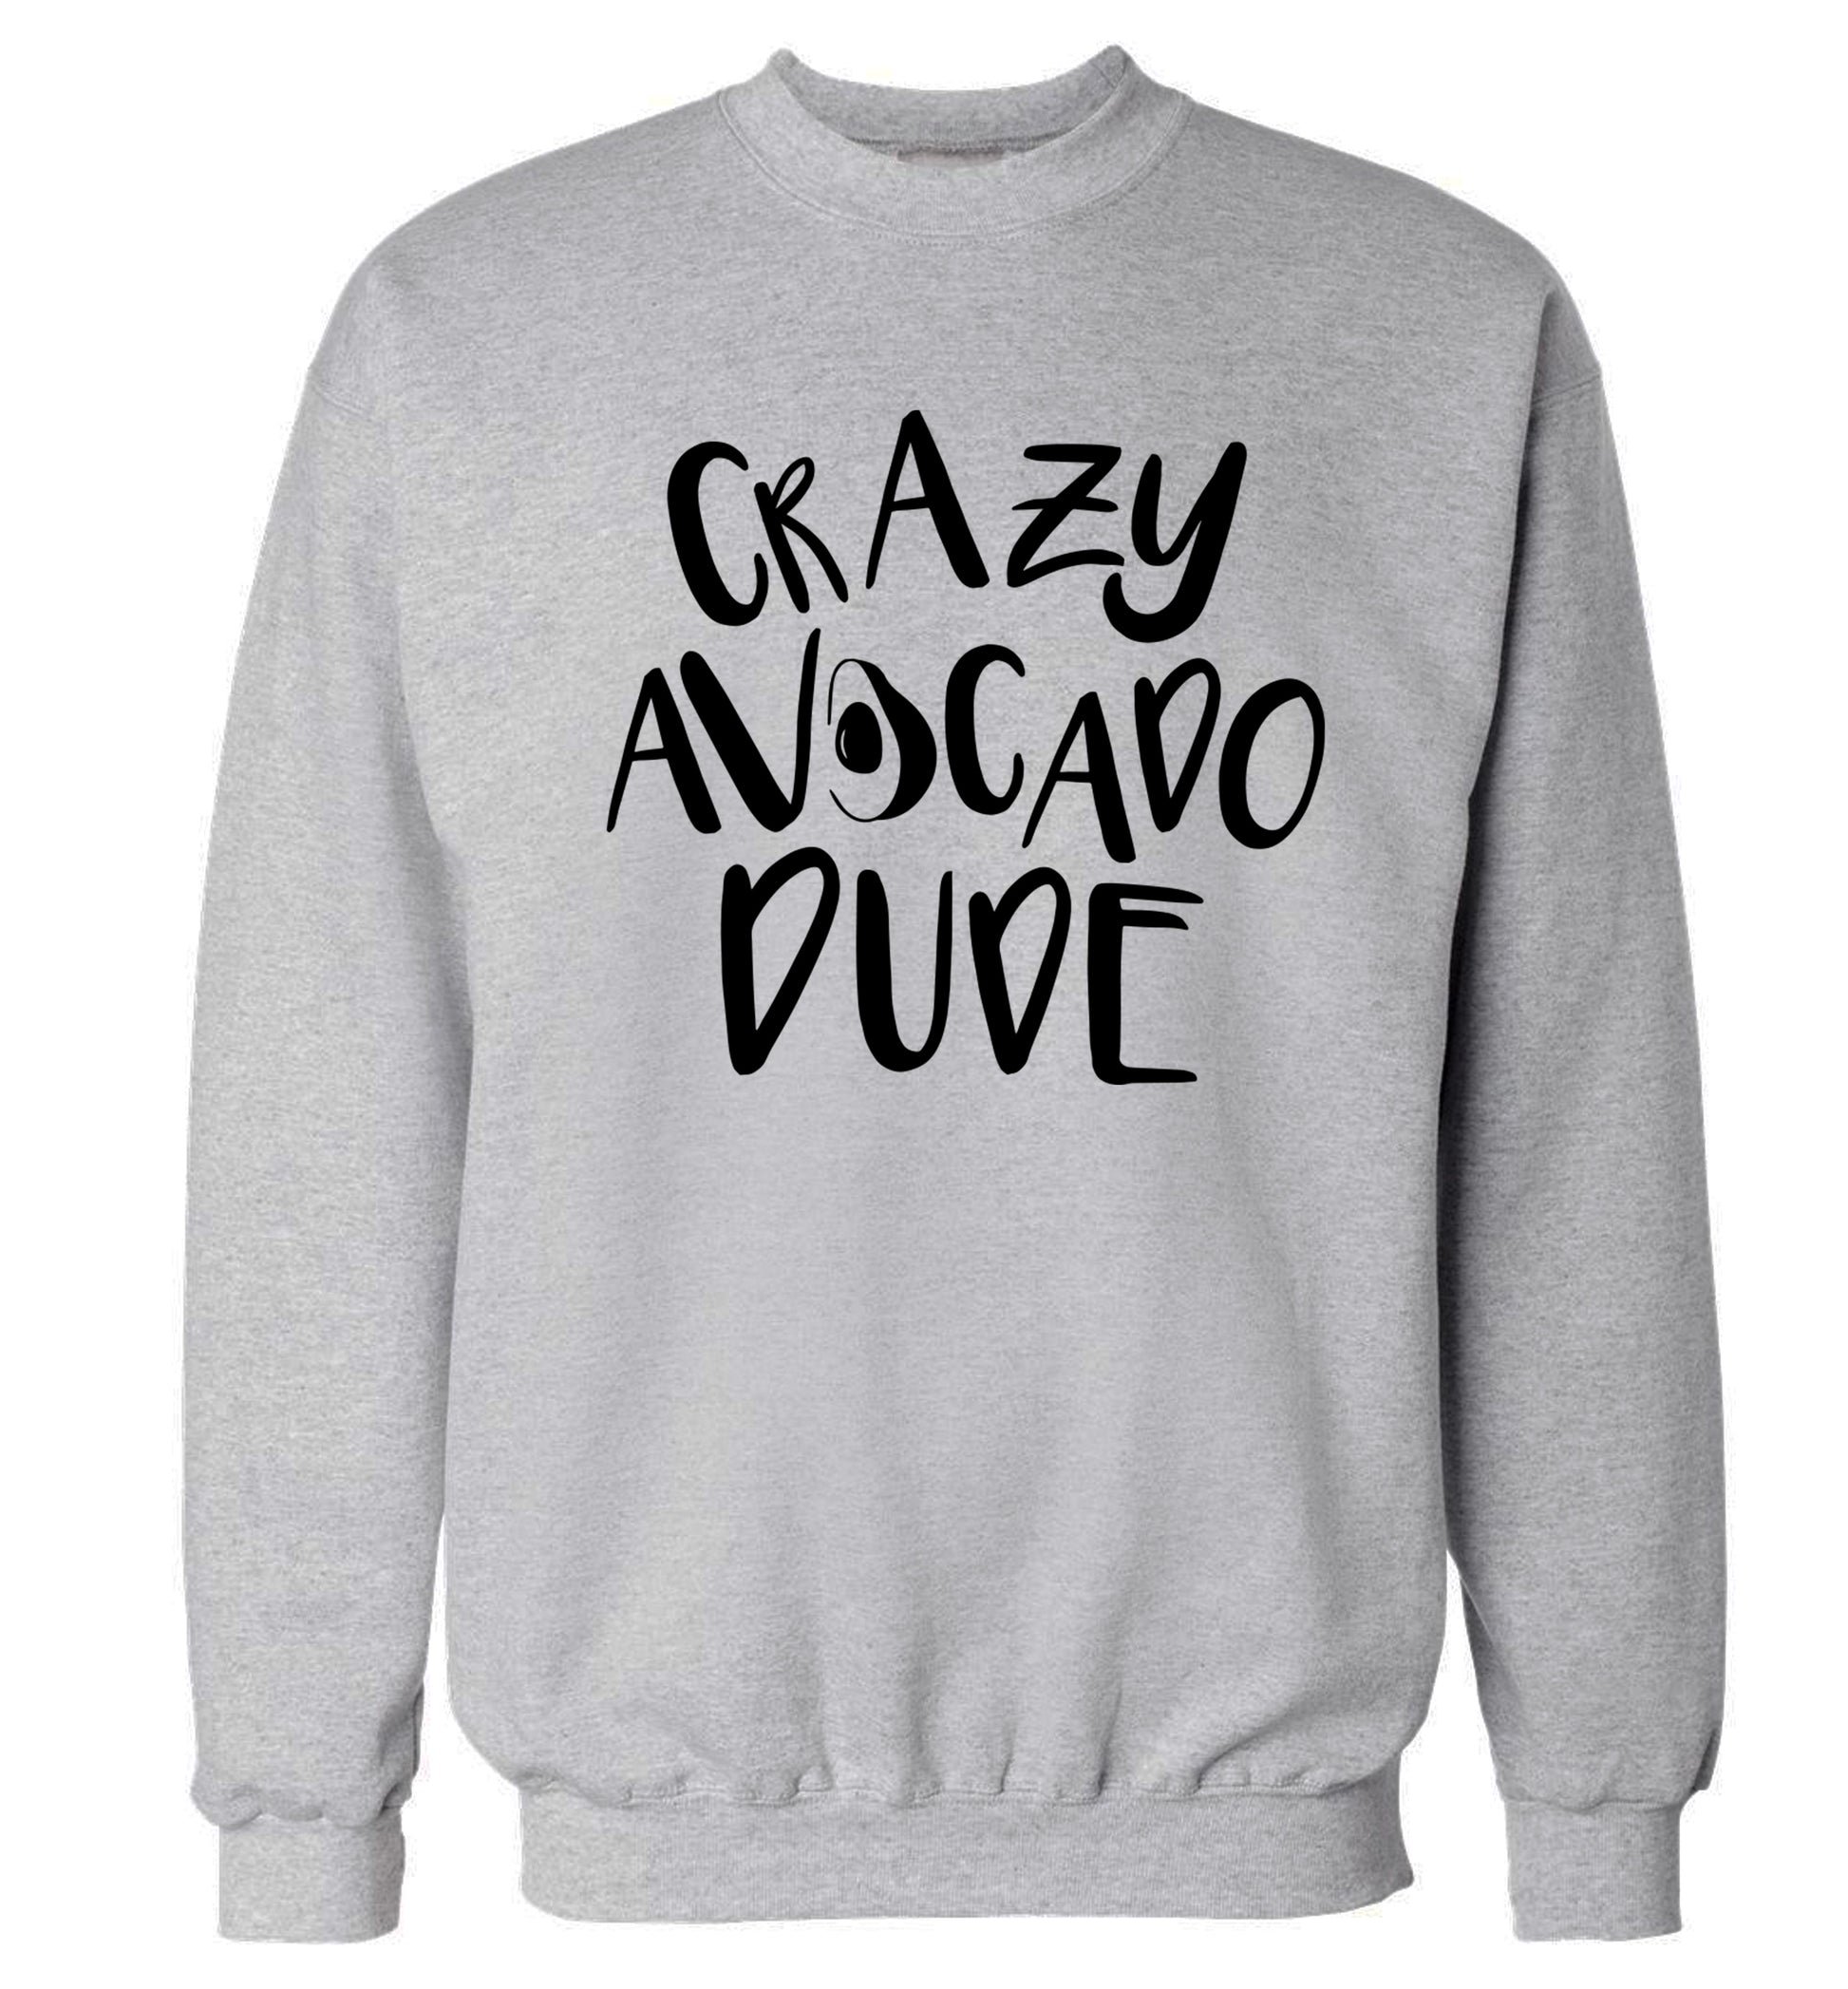 Crazy avocado dude Adult's unisex grey Sweater 2XL